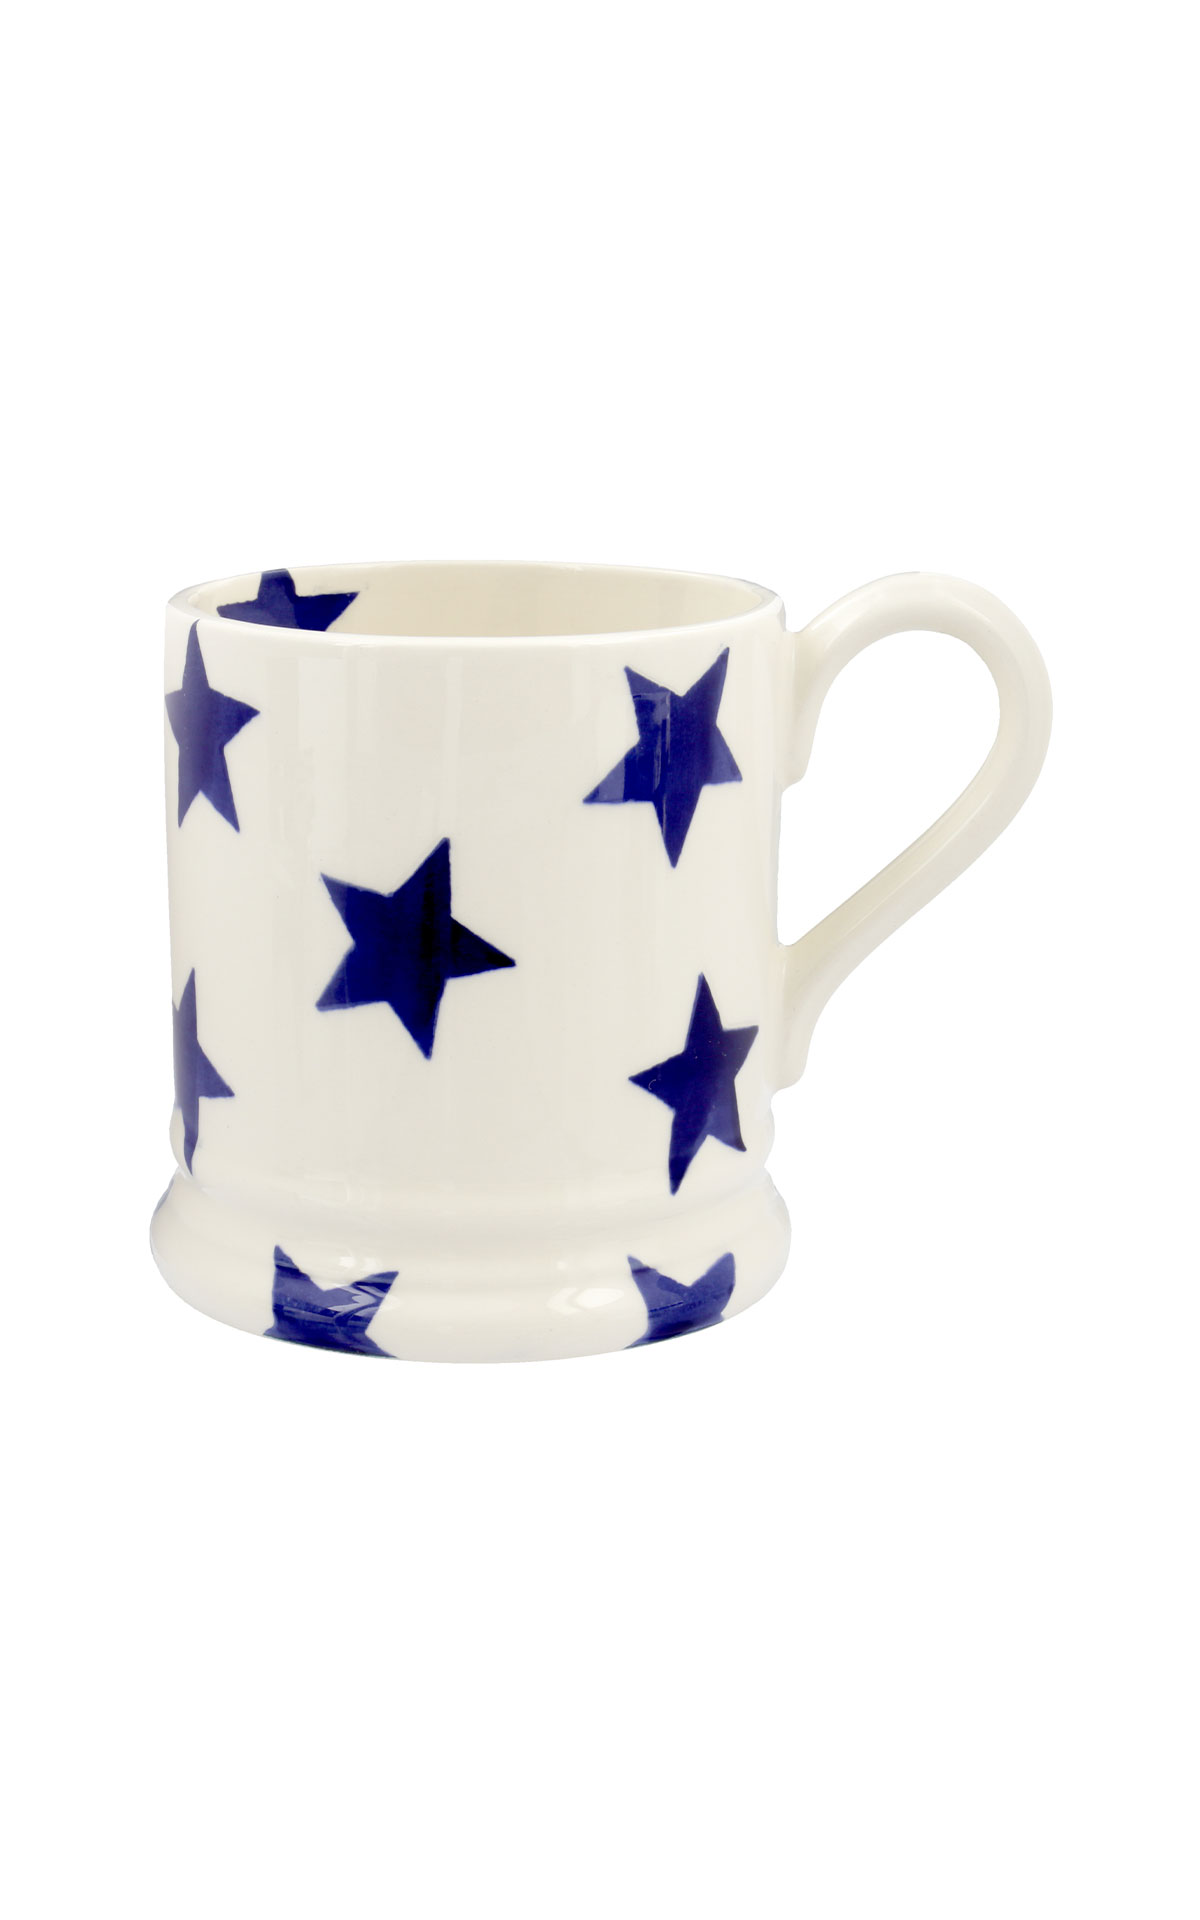 Emma Bridgewater Blue star half pint mug from Bicester Village